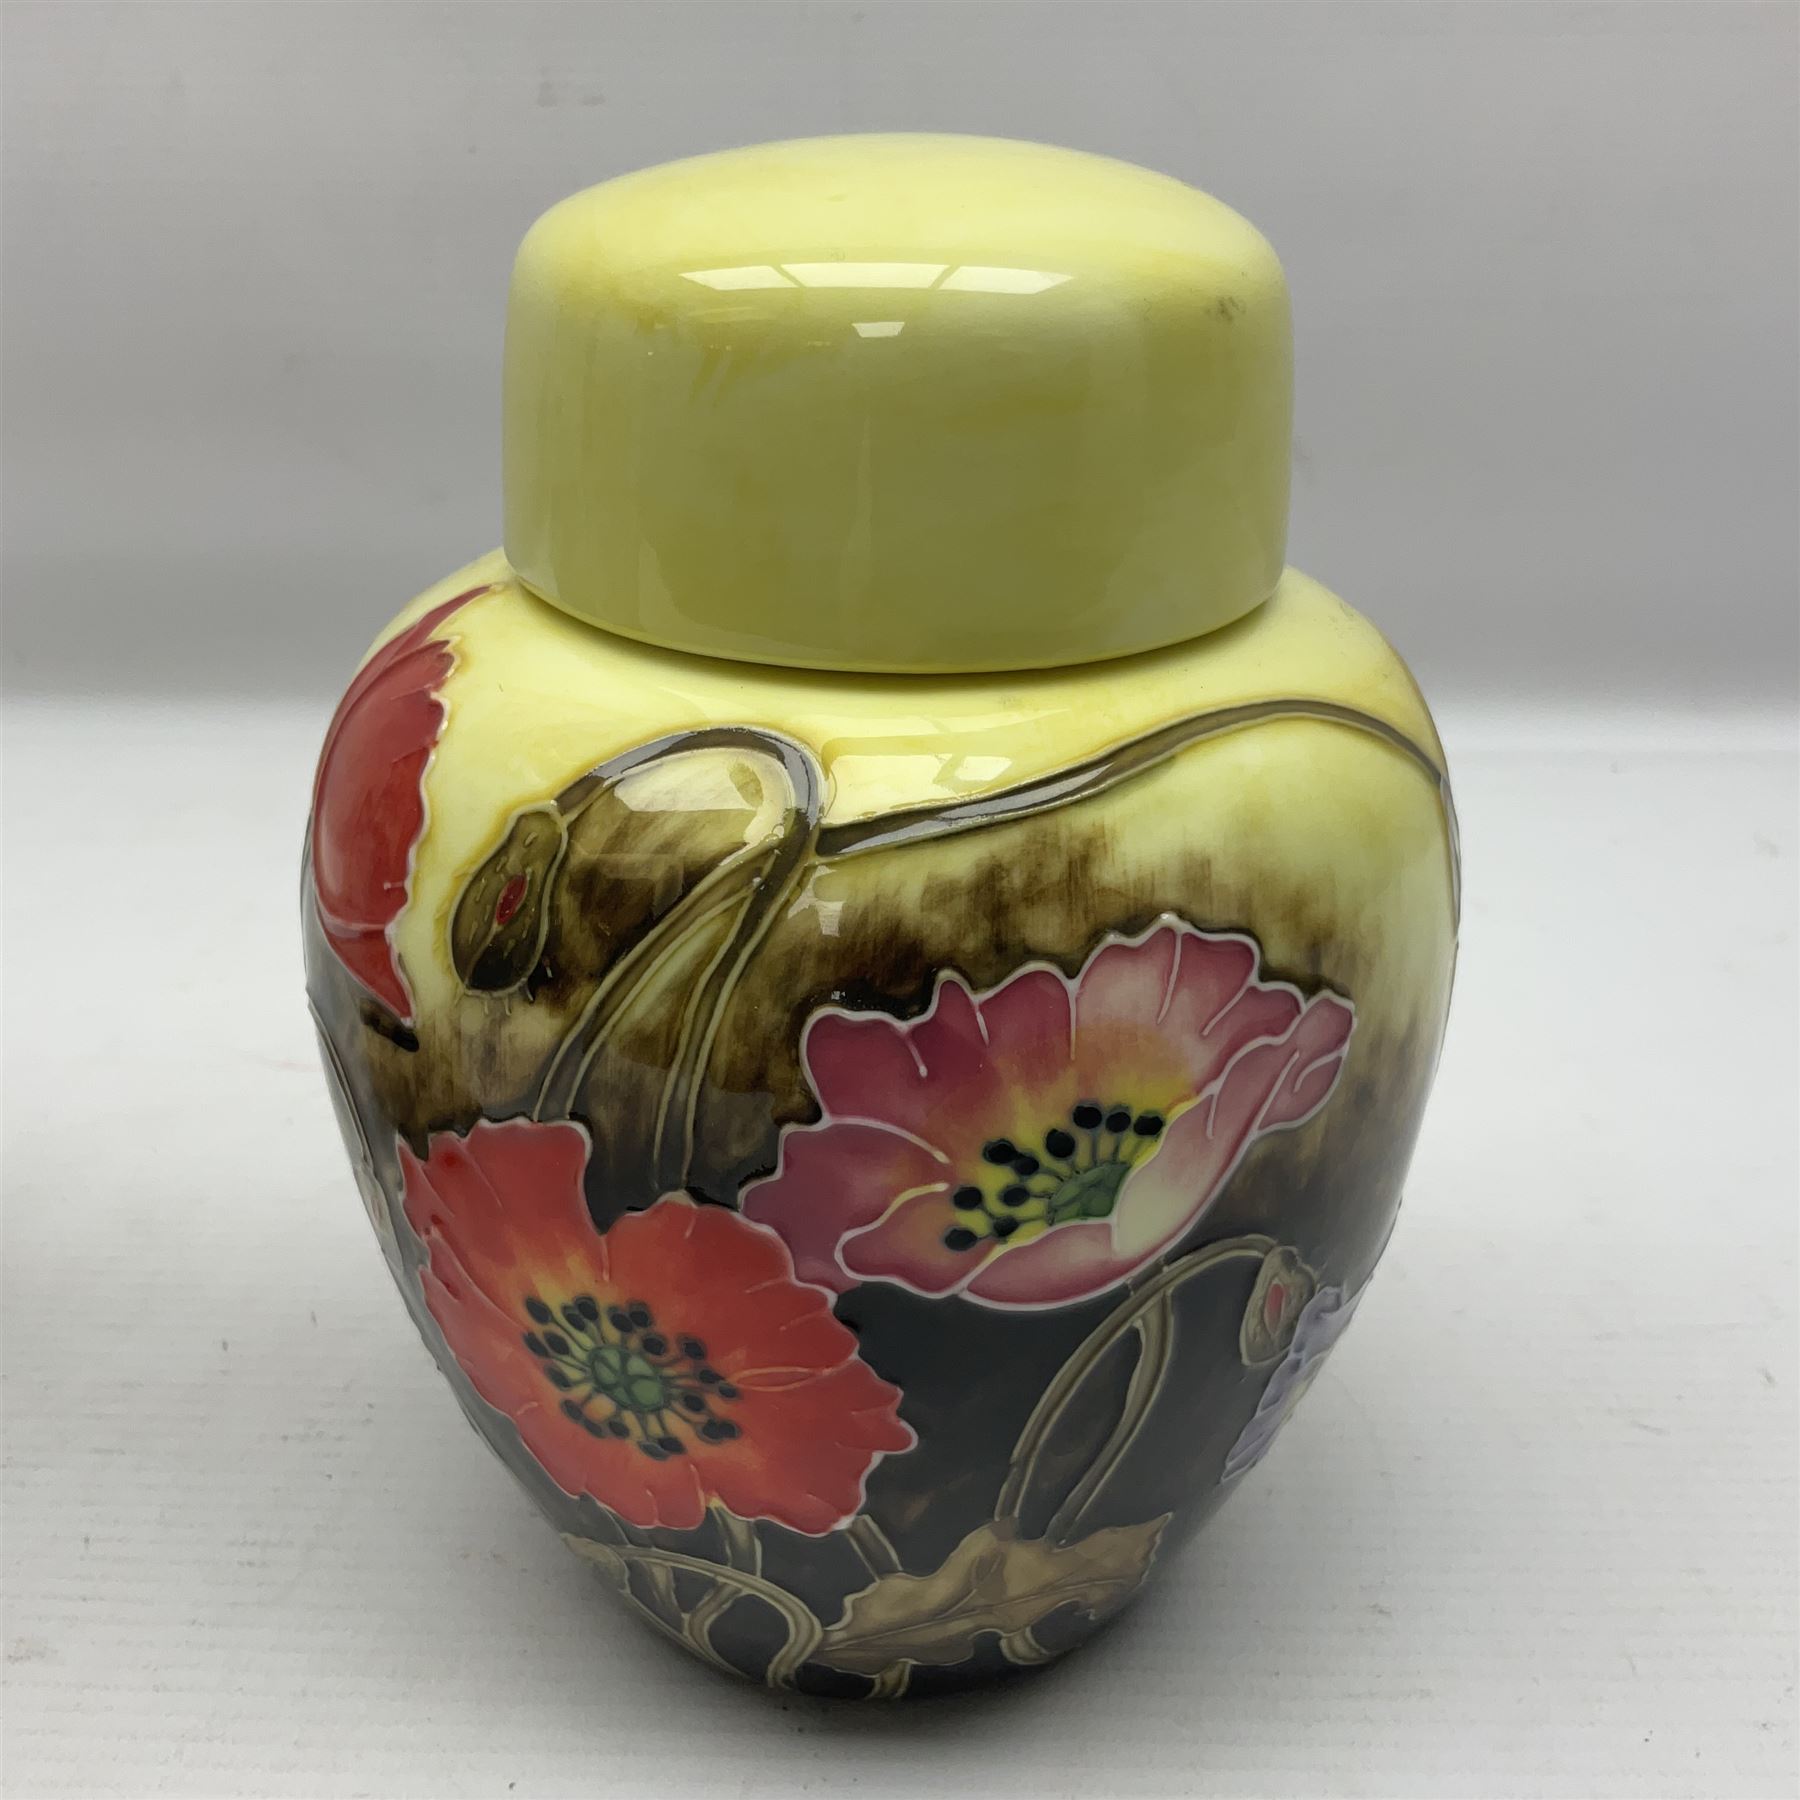 Old Tupton Ware ginger jar - Image 3 of 8